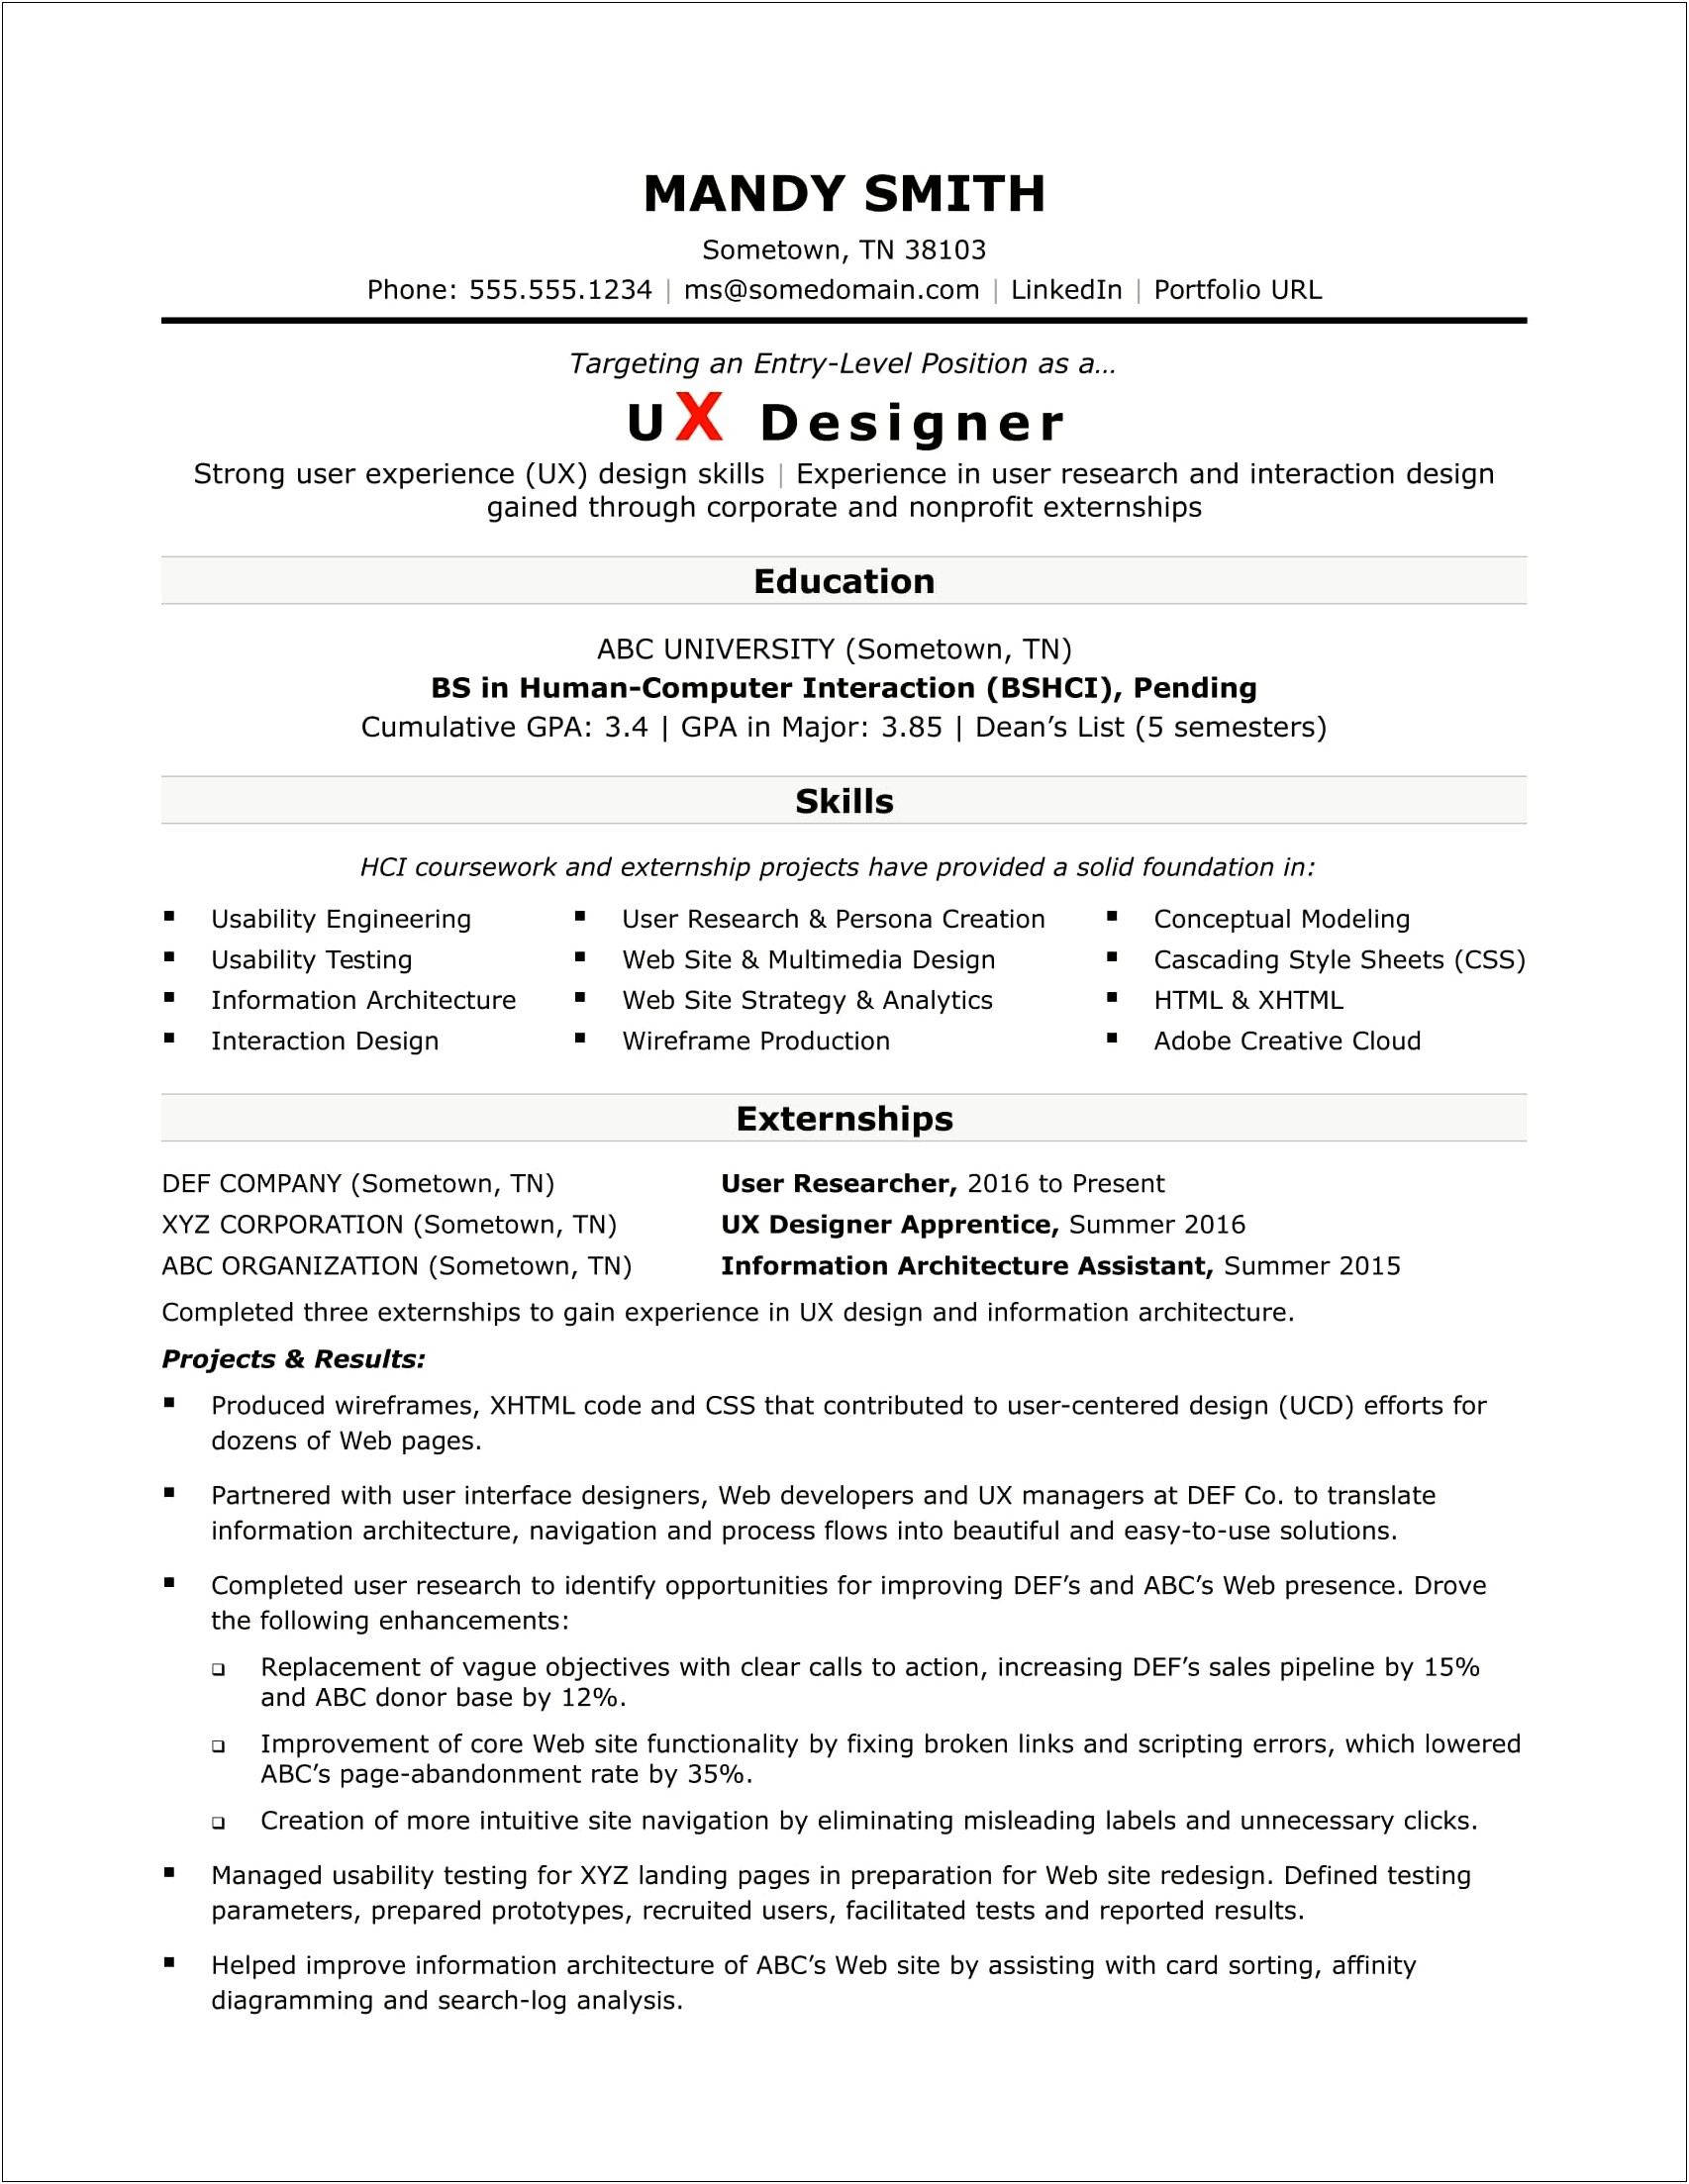 Website Design Technical Skills On Resume